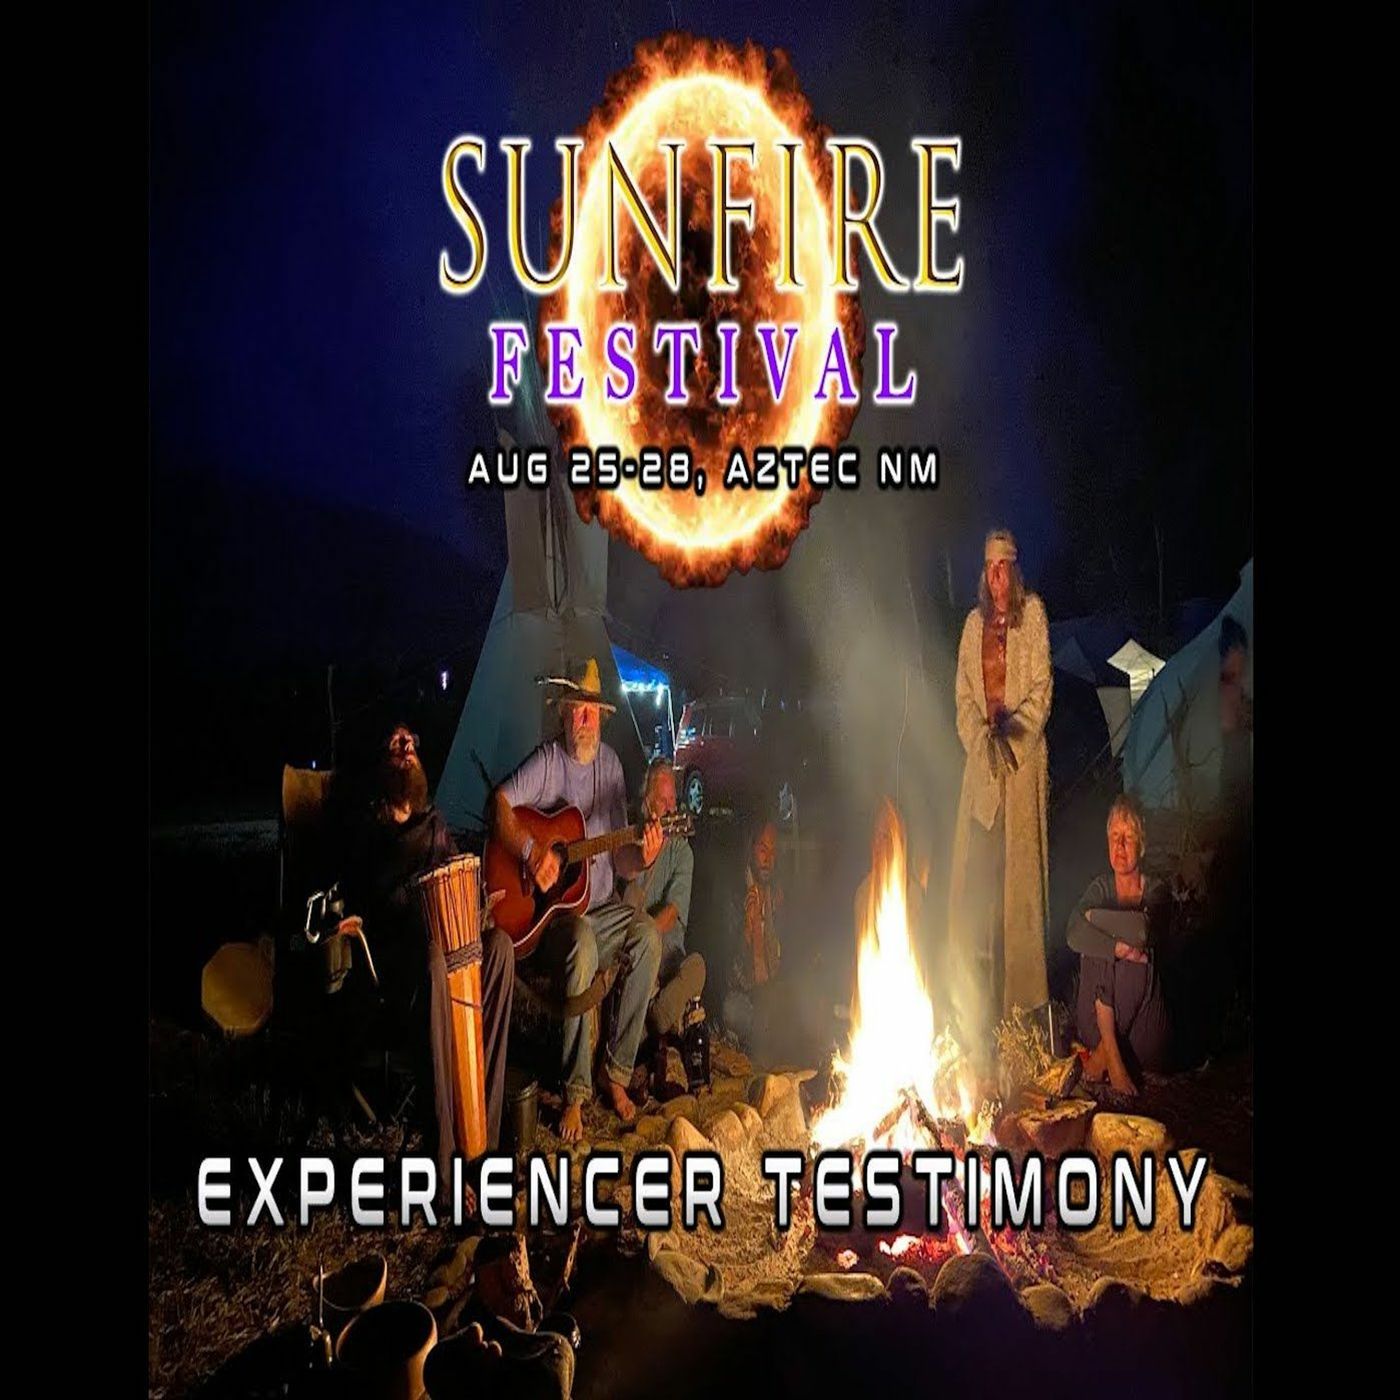 Sunfire Festival - Aztec, New Mexico: Experiencer Testimony - Aug 25 -28th, 2023